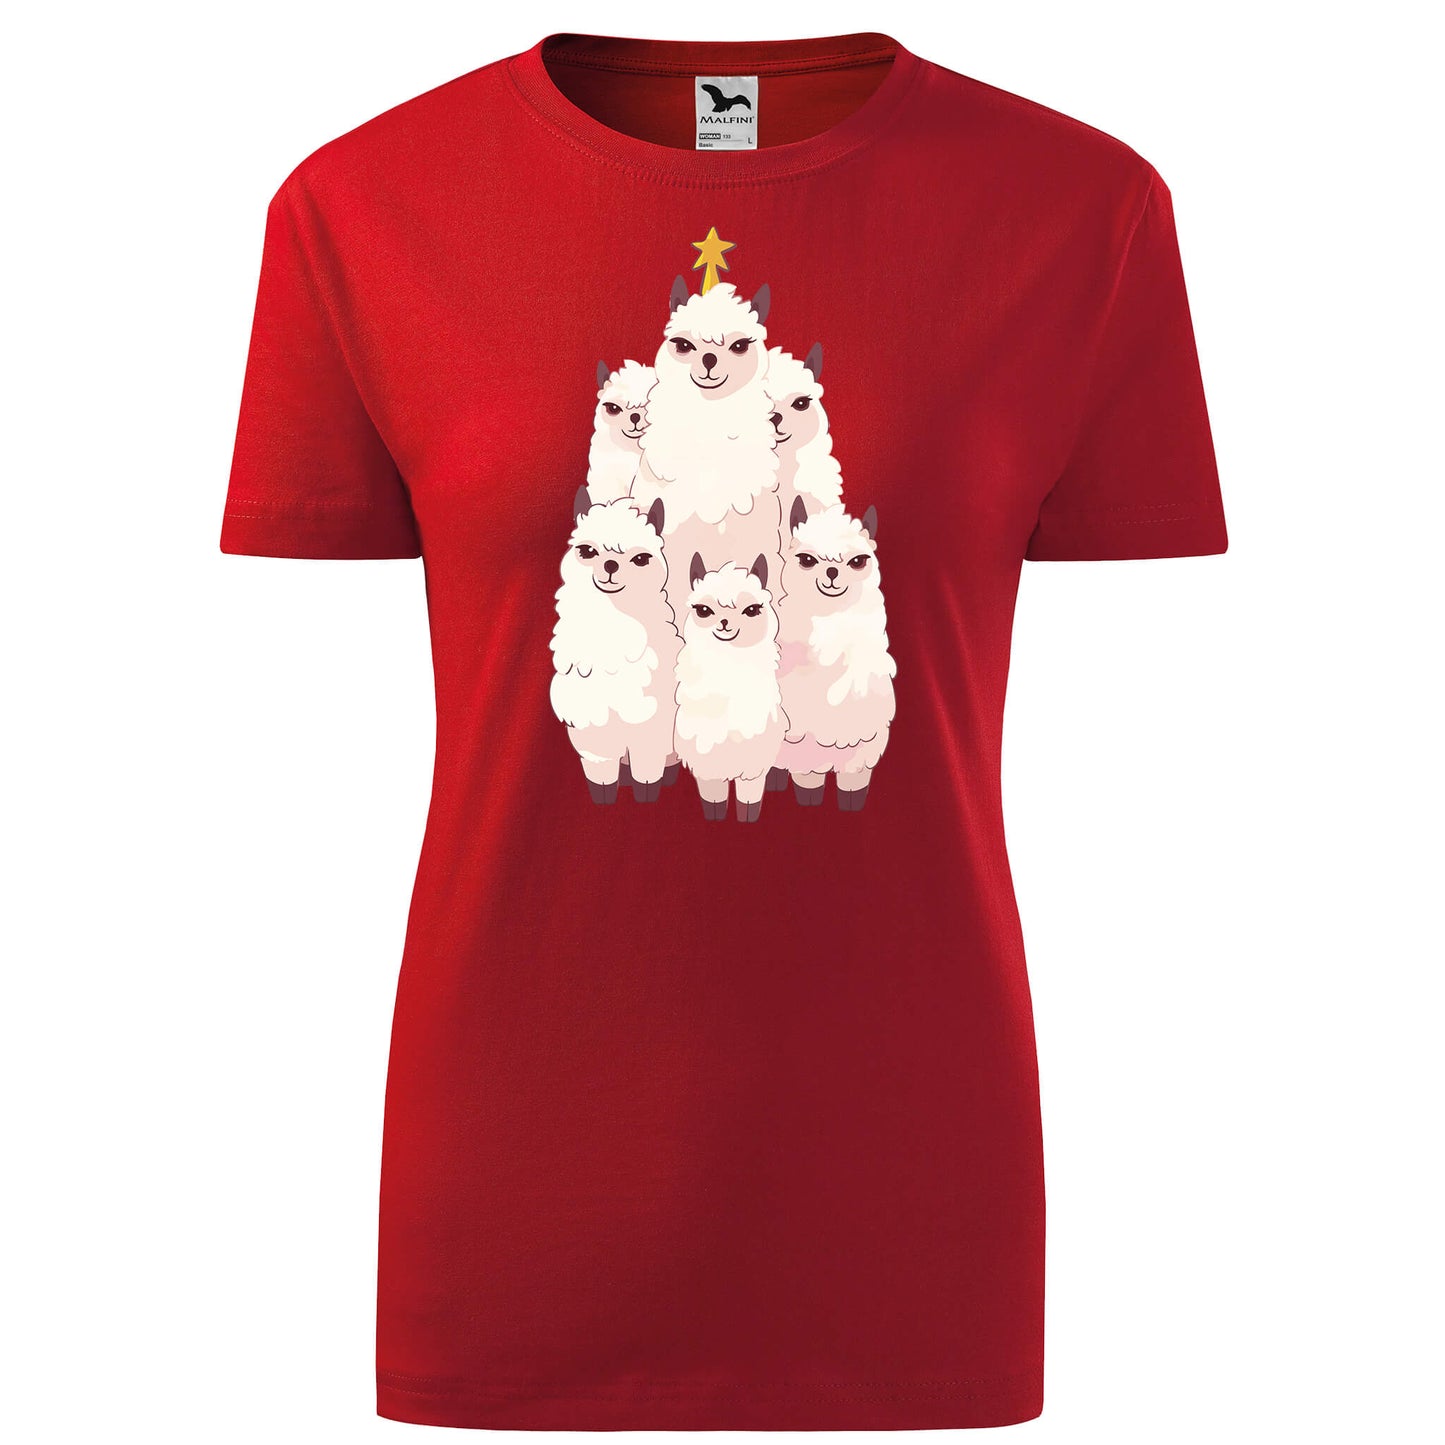 Llama christmas tree t-shirt - rvdesignprint